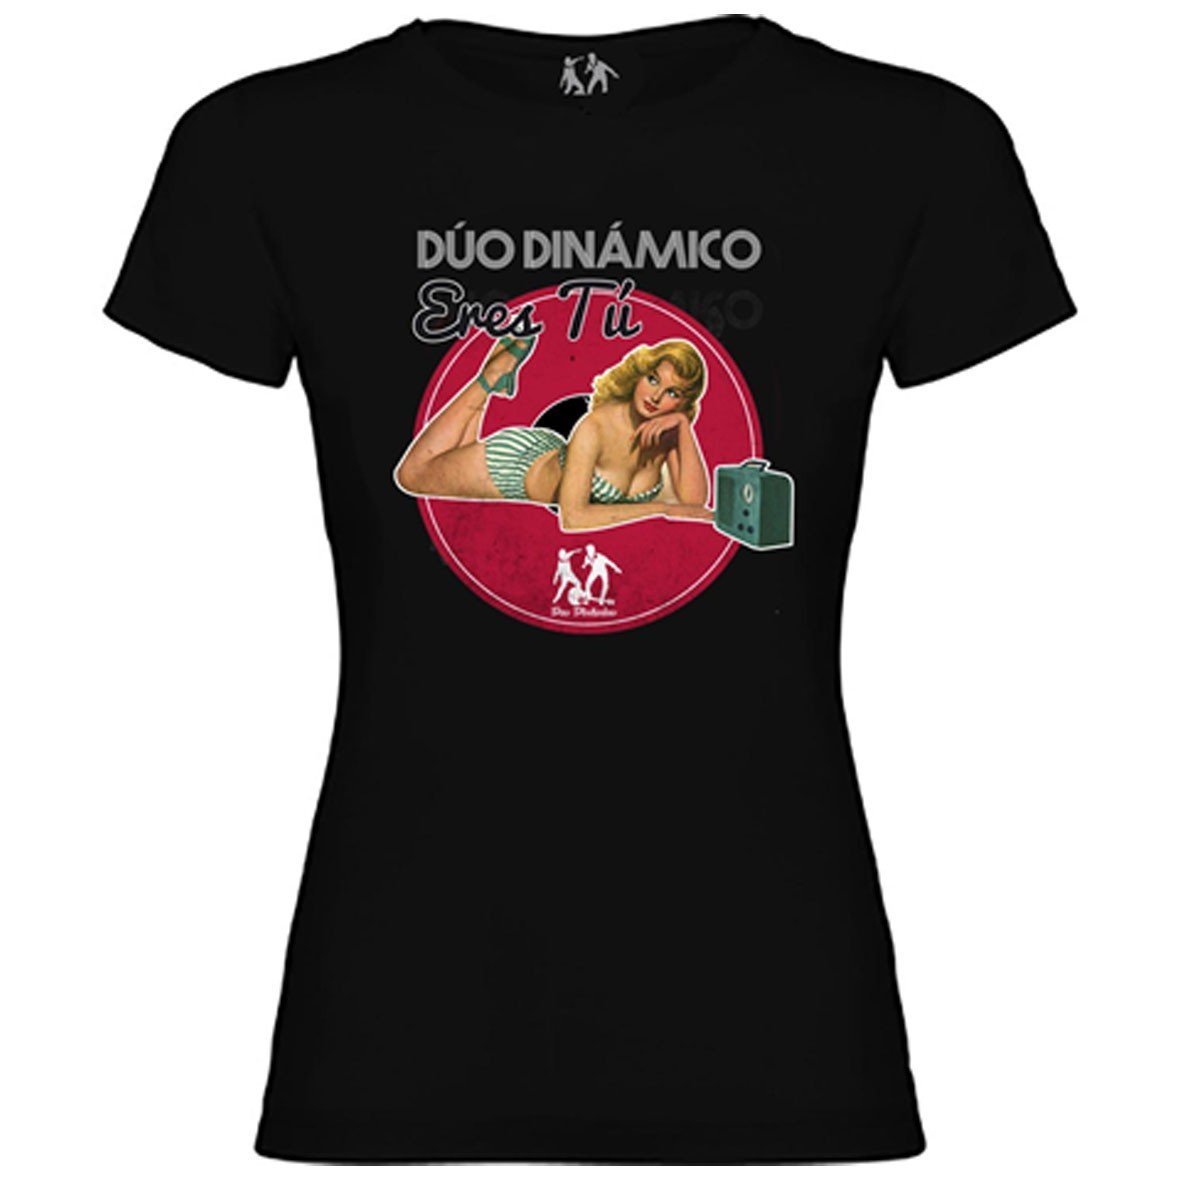 El Dúo Dinámico - Camiseta Chica "Eres tú" - D2fy · Rocktud - Duo Dinámico